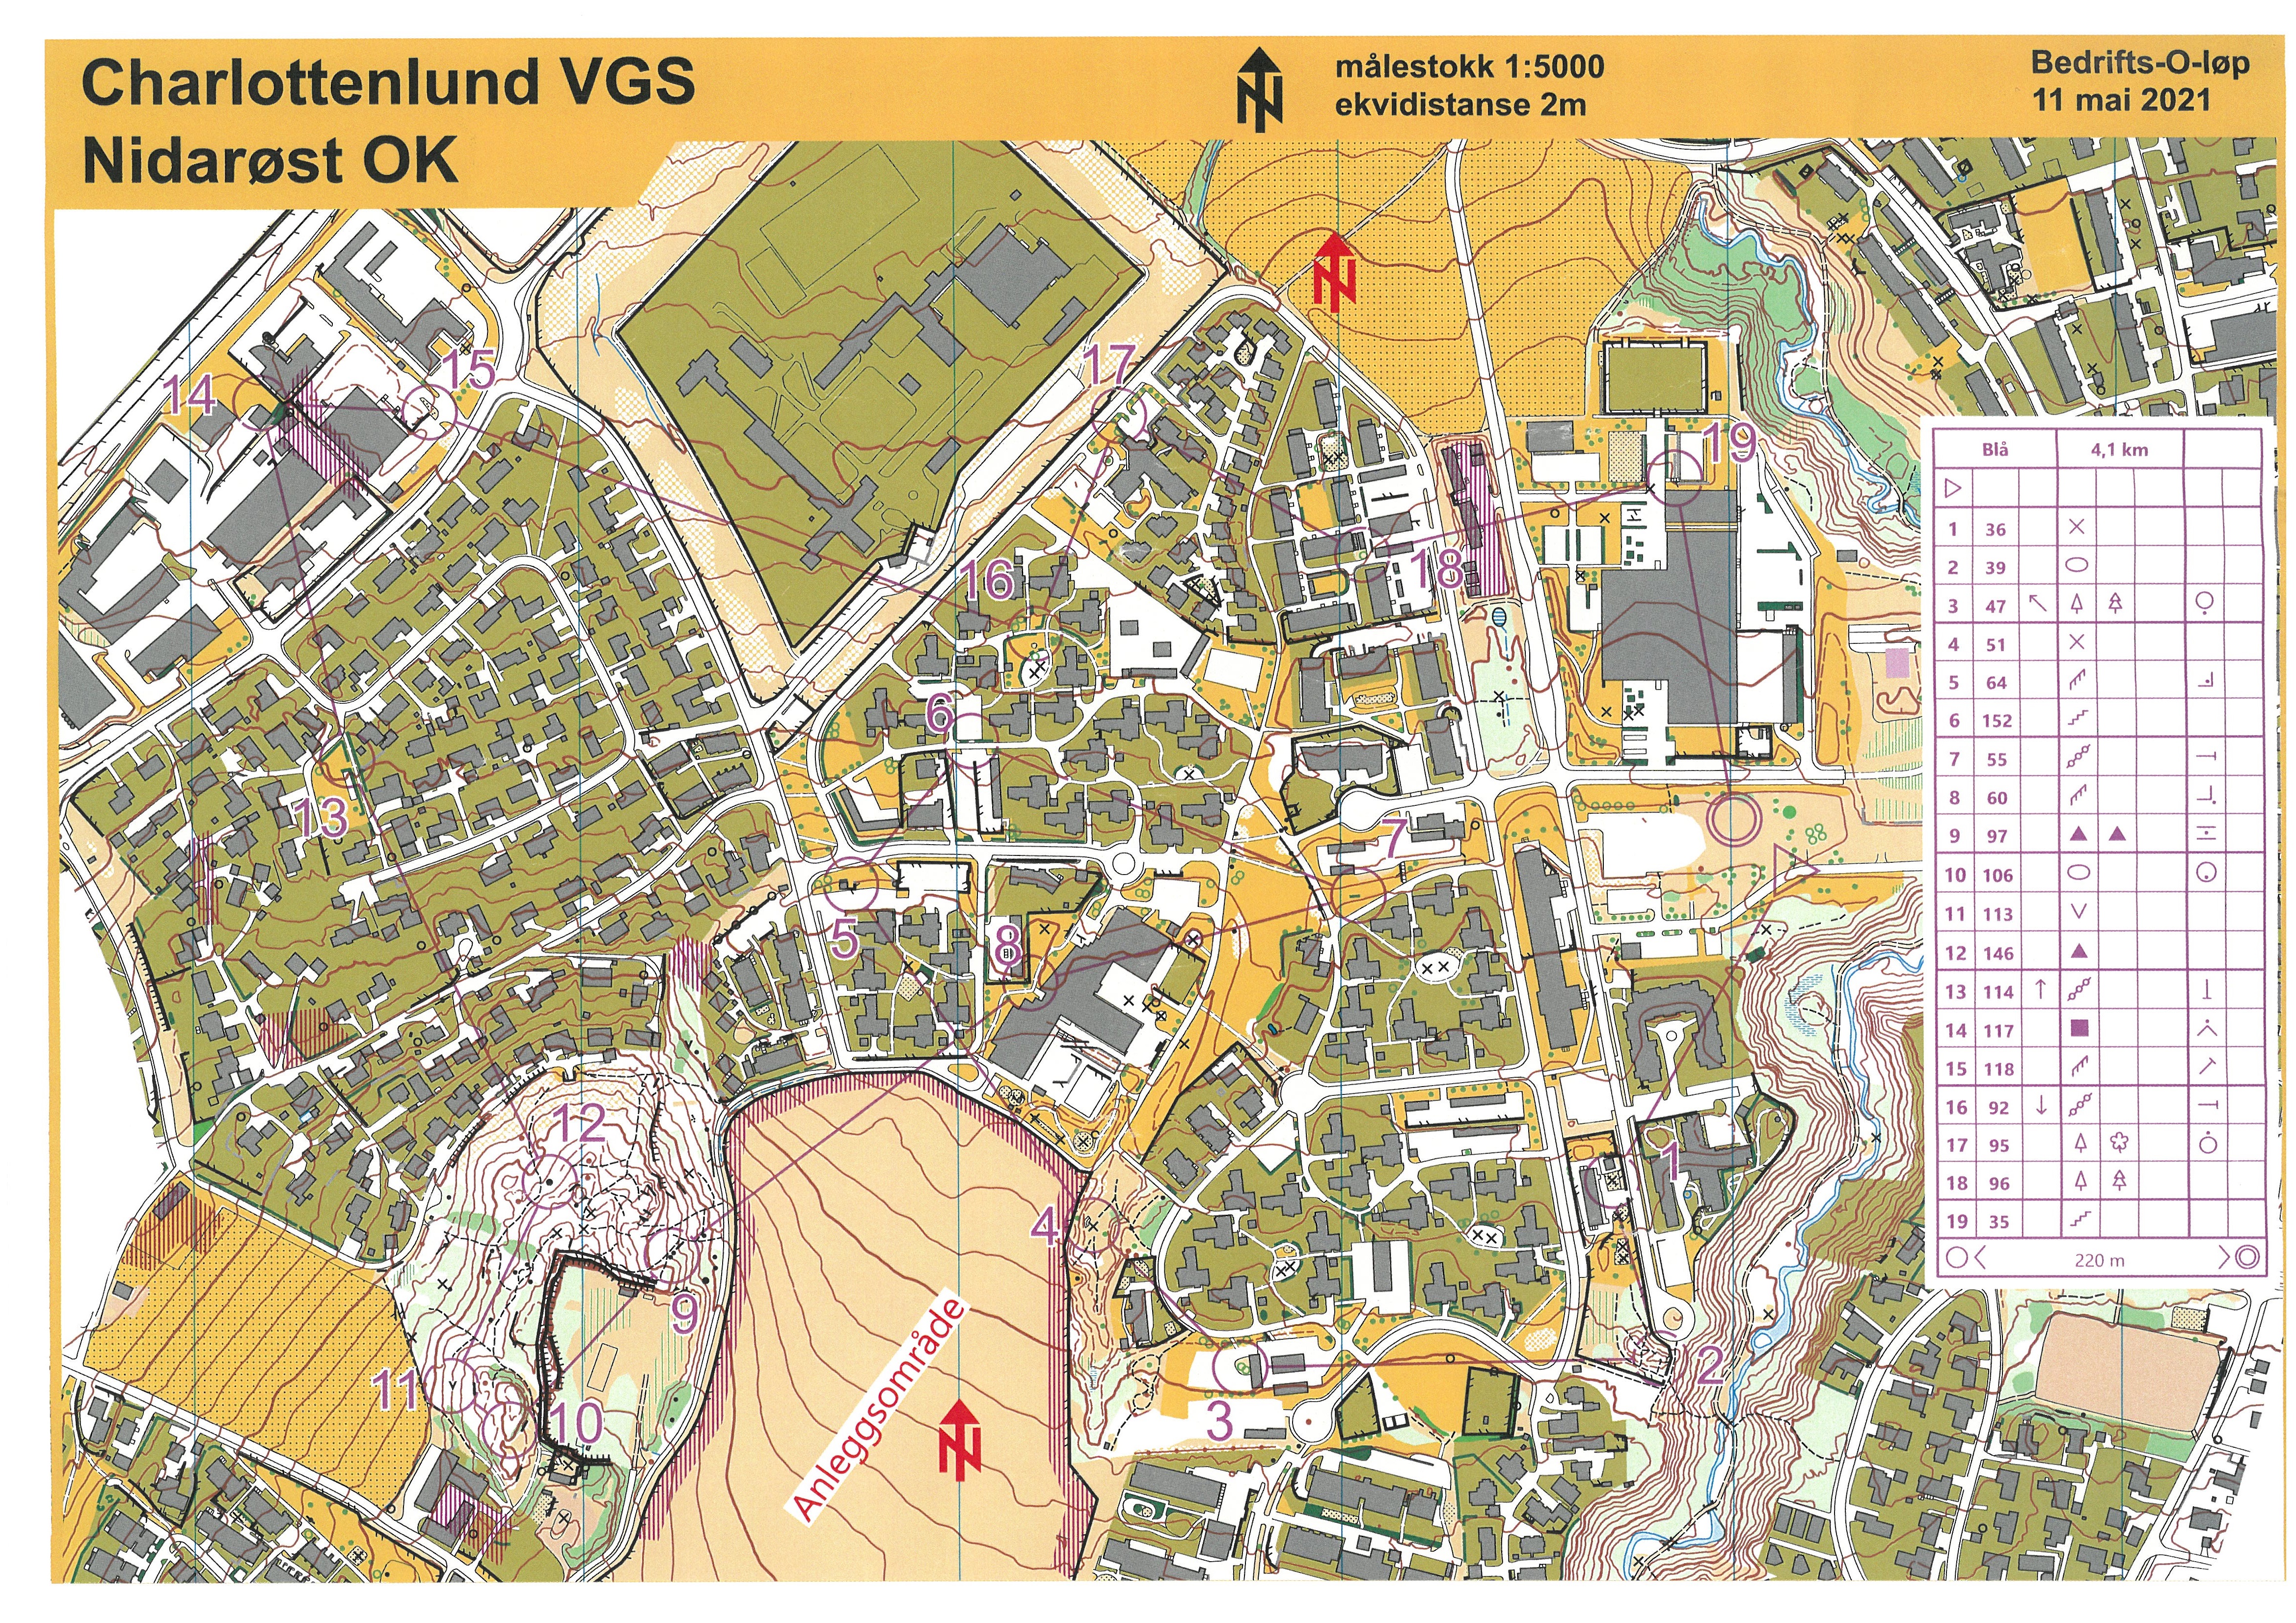 Bedrifts o-løp 1 - Charlottenlund (11-05-2021)